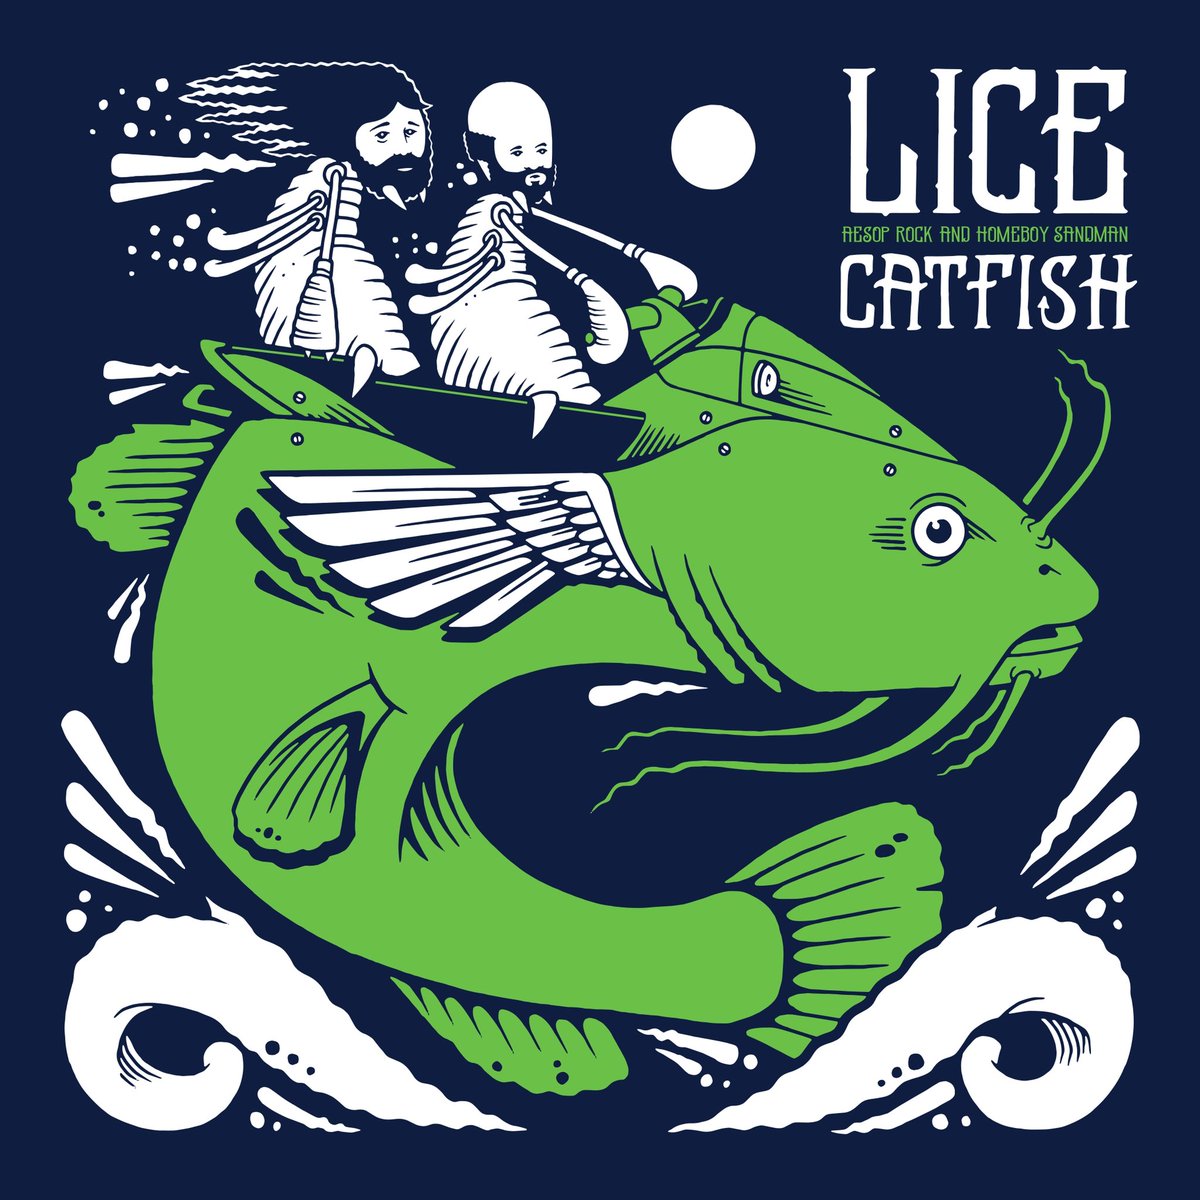 Lice - “Catfish” 

New song tonight.

Art by @JeremyFish 🐈🎣